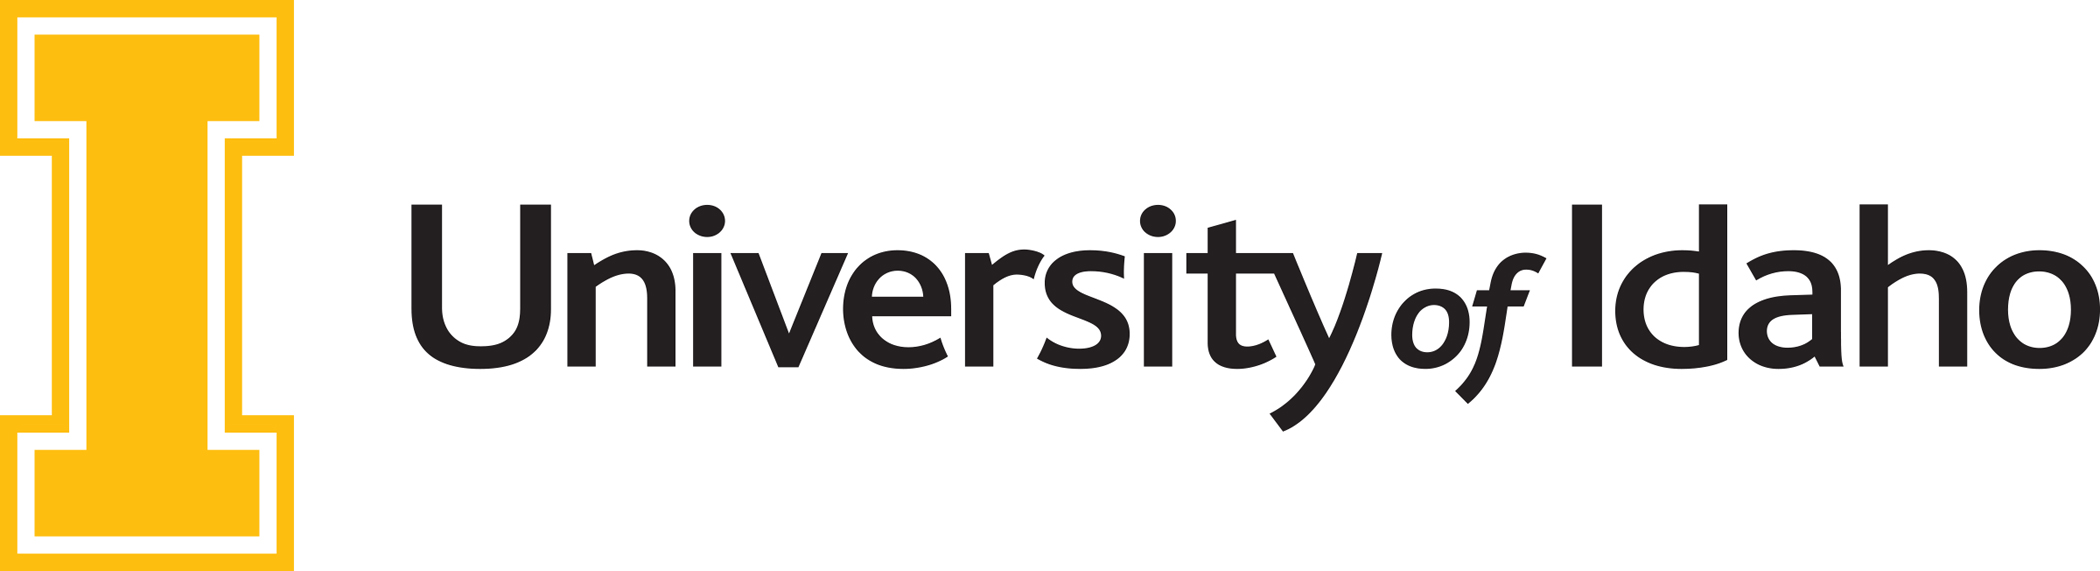 University_of_Idaho_logo.png